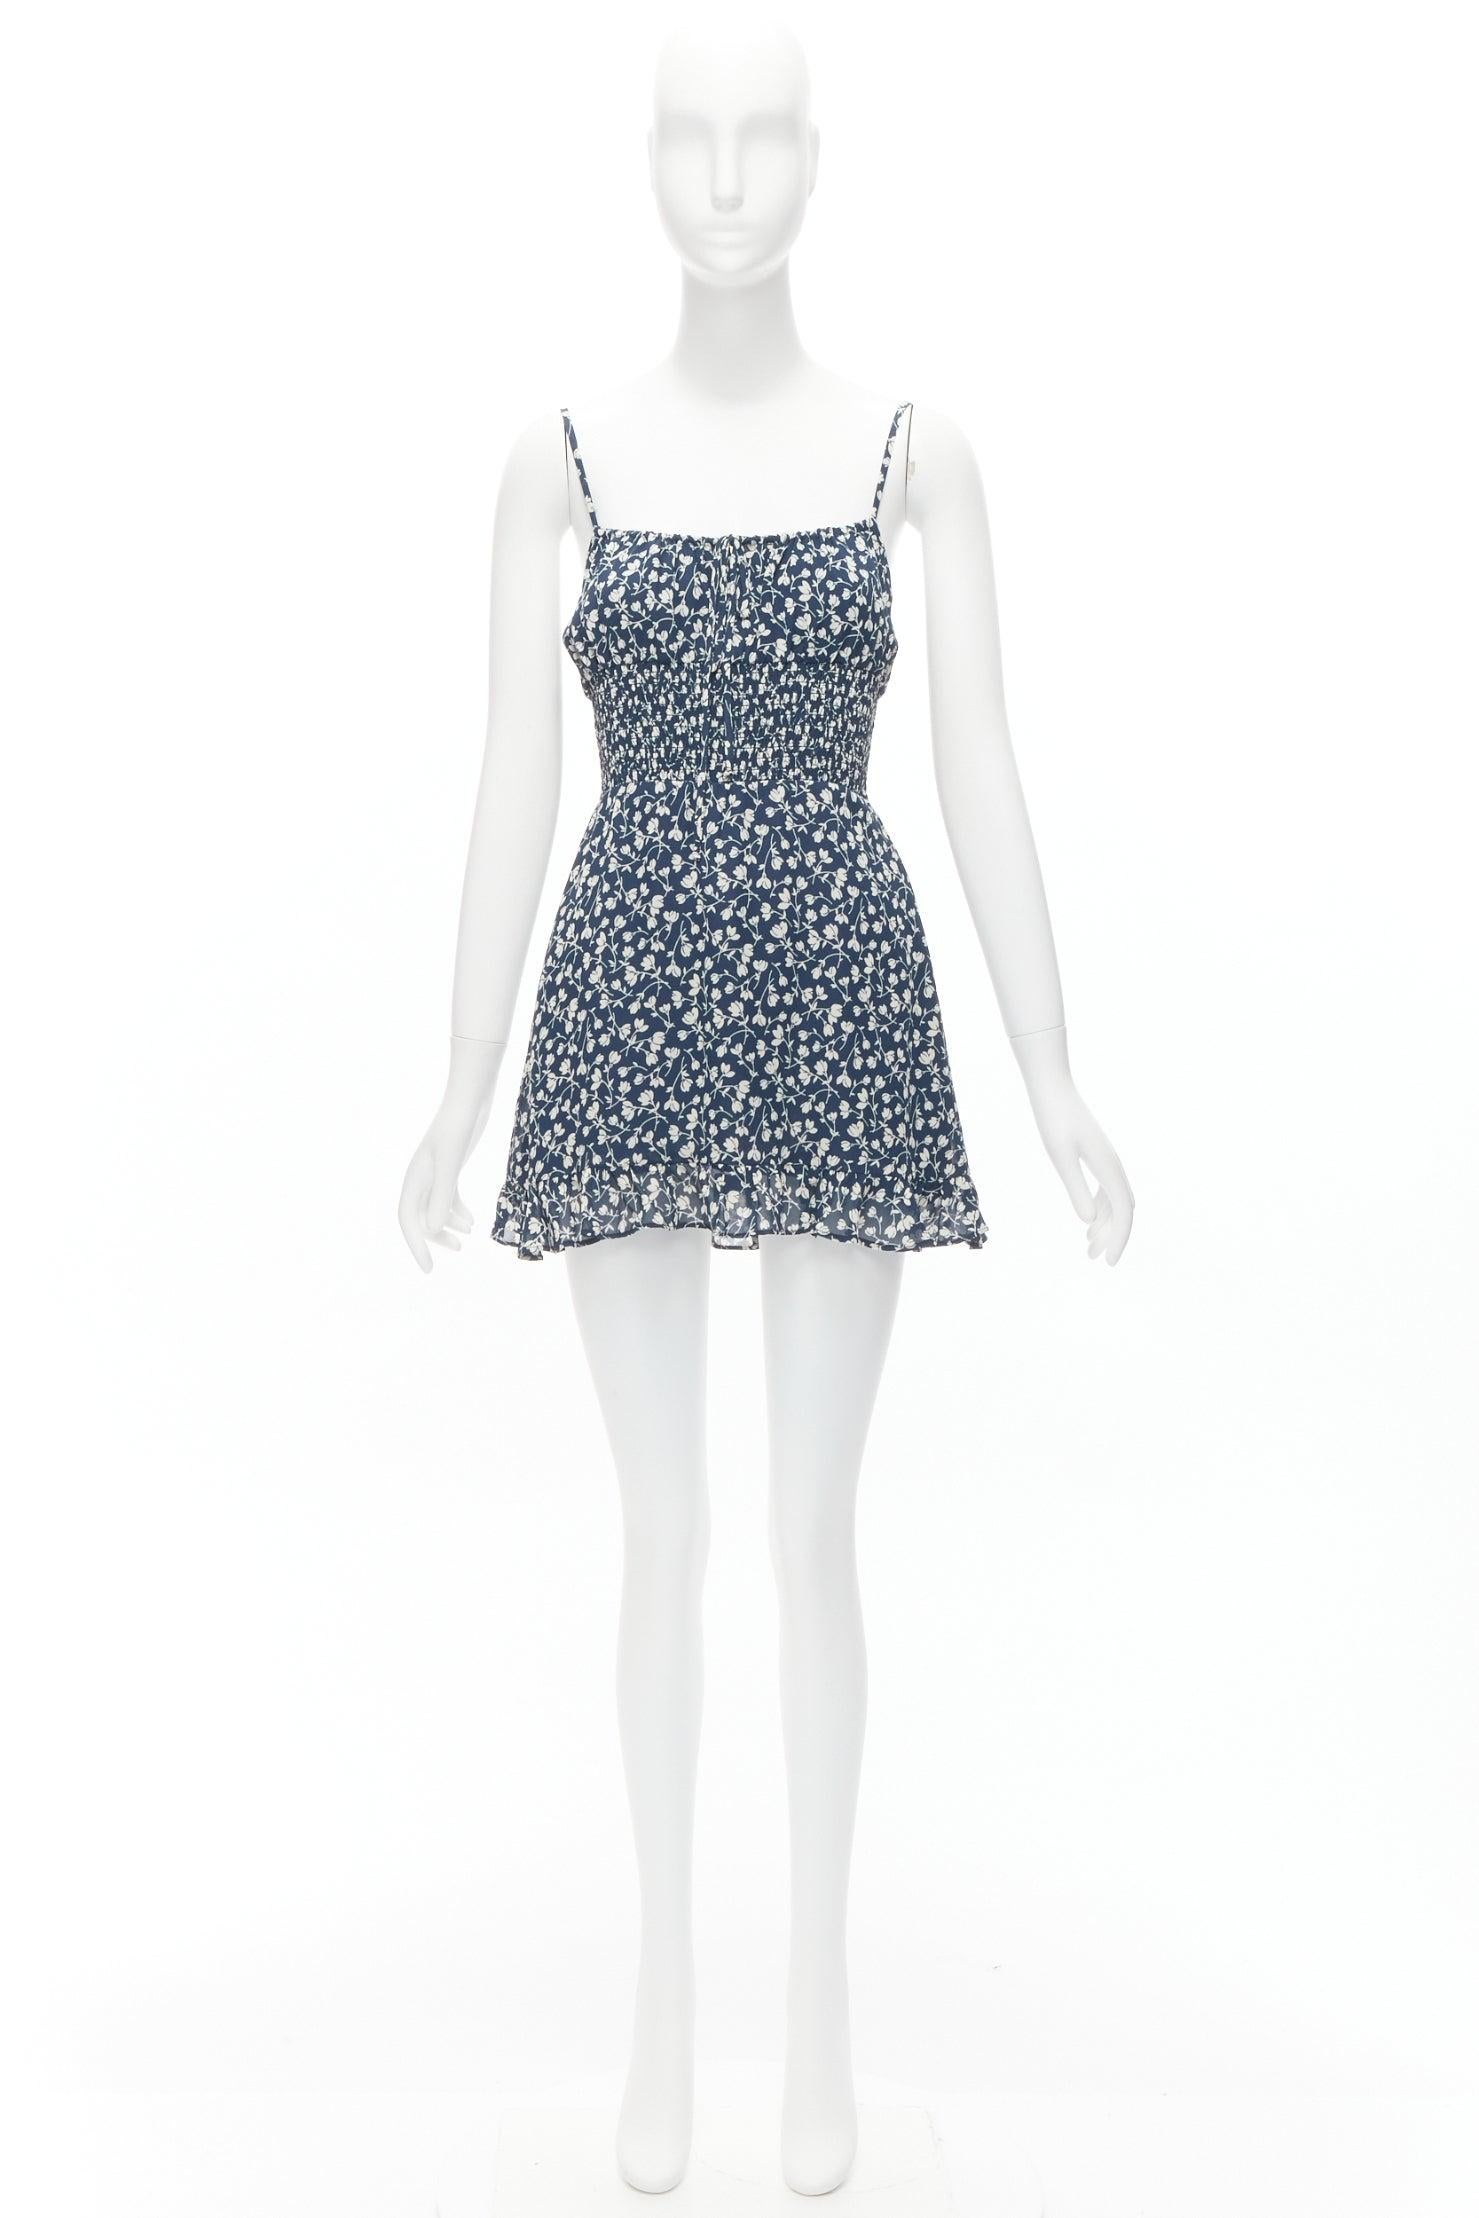 REFORMATION Elyse white navy floral print smocked bodice mini dress US2 S For Sale 4